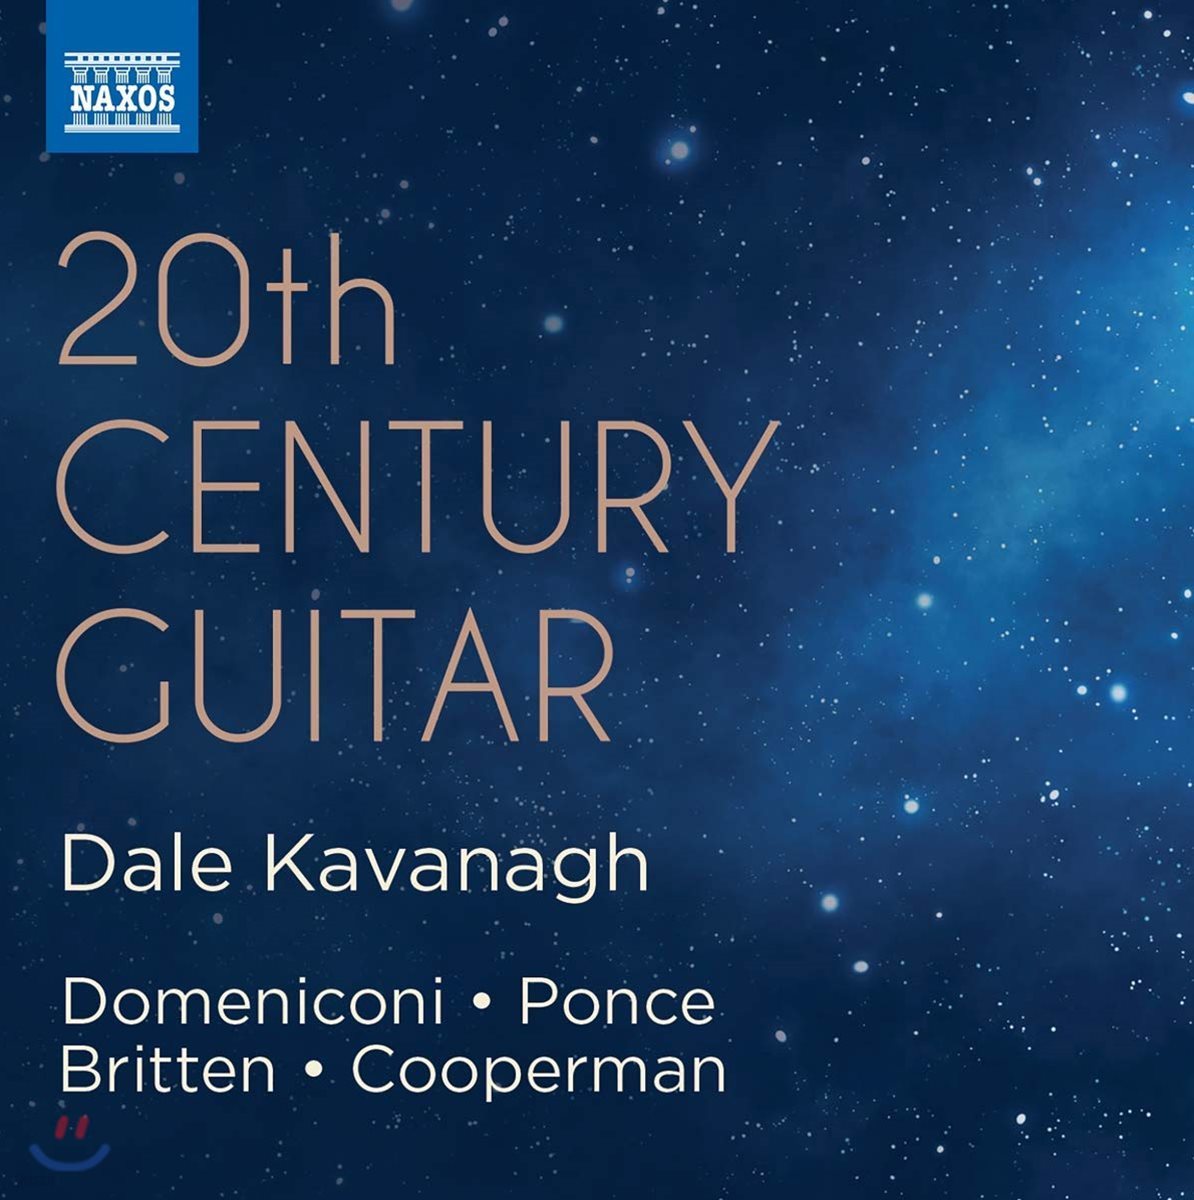 Dale Kavanagh 20세기 클래식 기타 작품집 (20th Century Guitar)